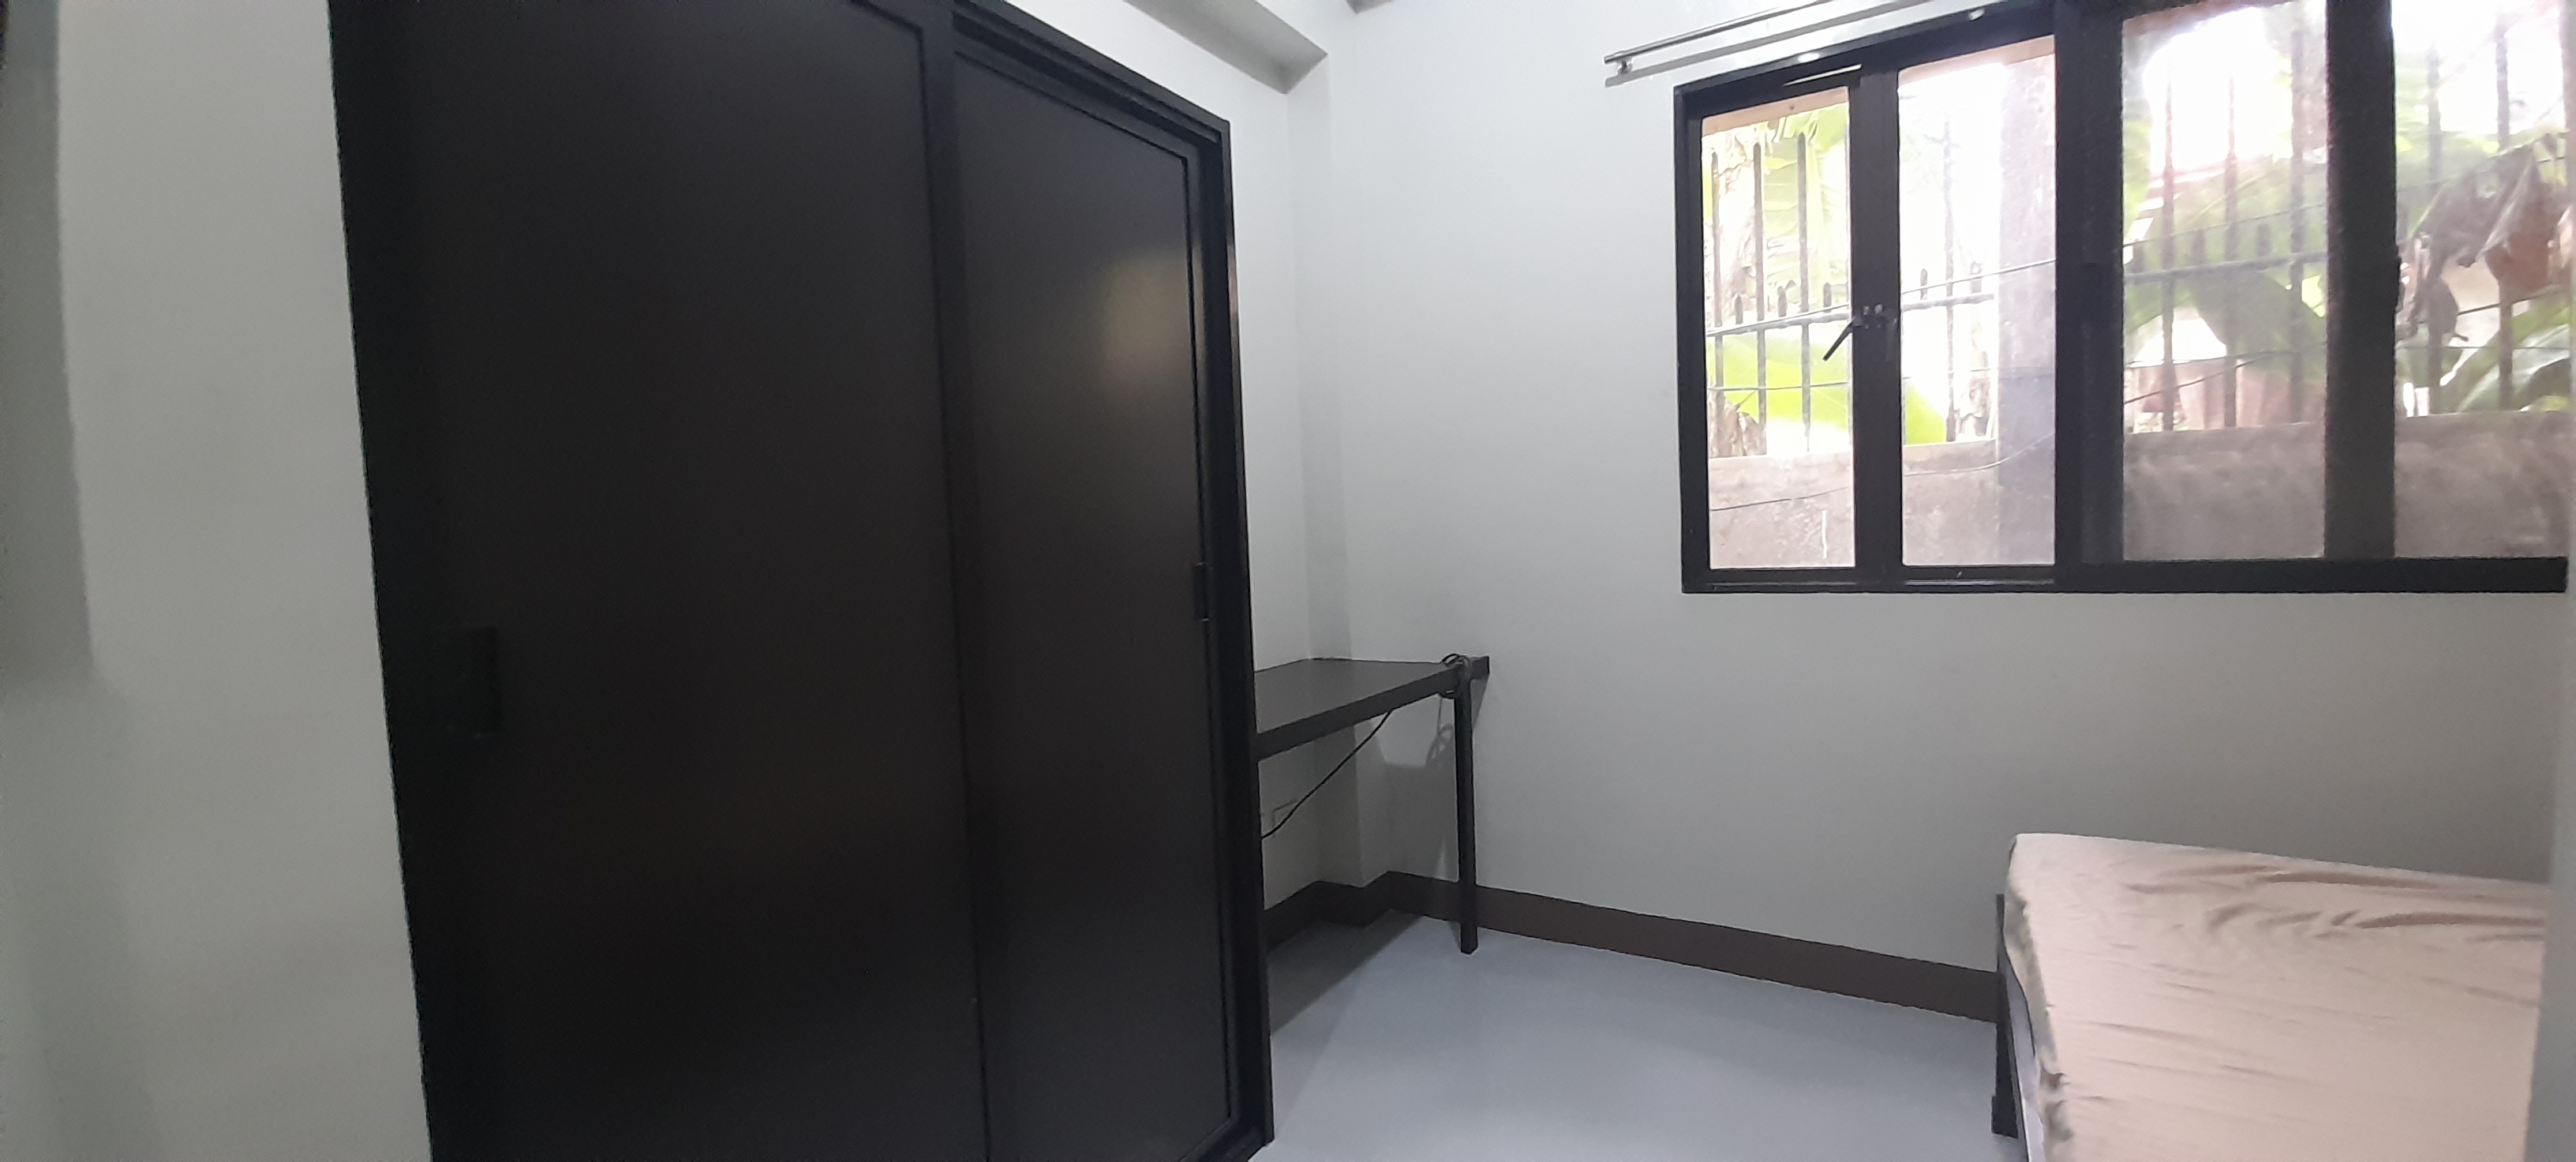 1-bedroom-semi-furnished-apartment-in-banawa-cebu-city-cebu